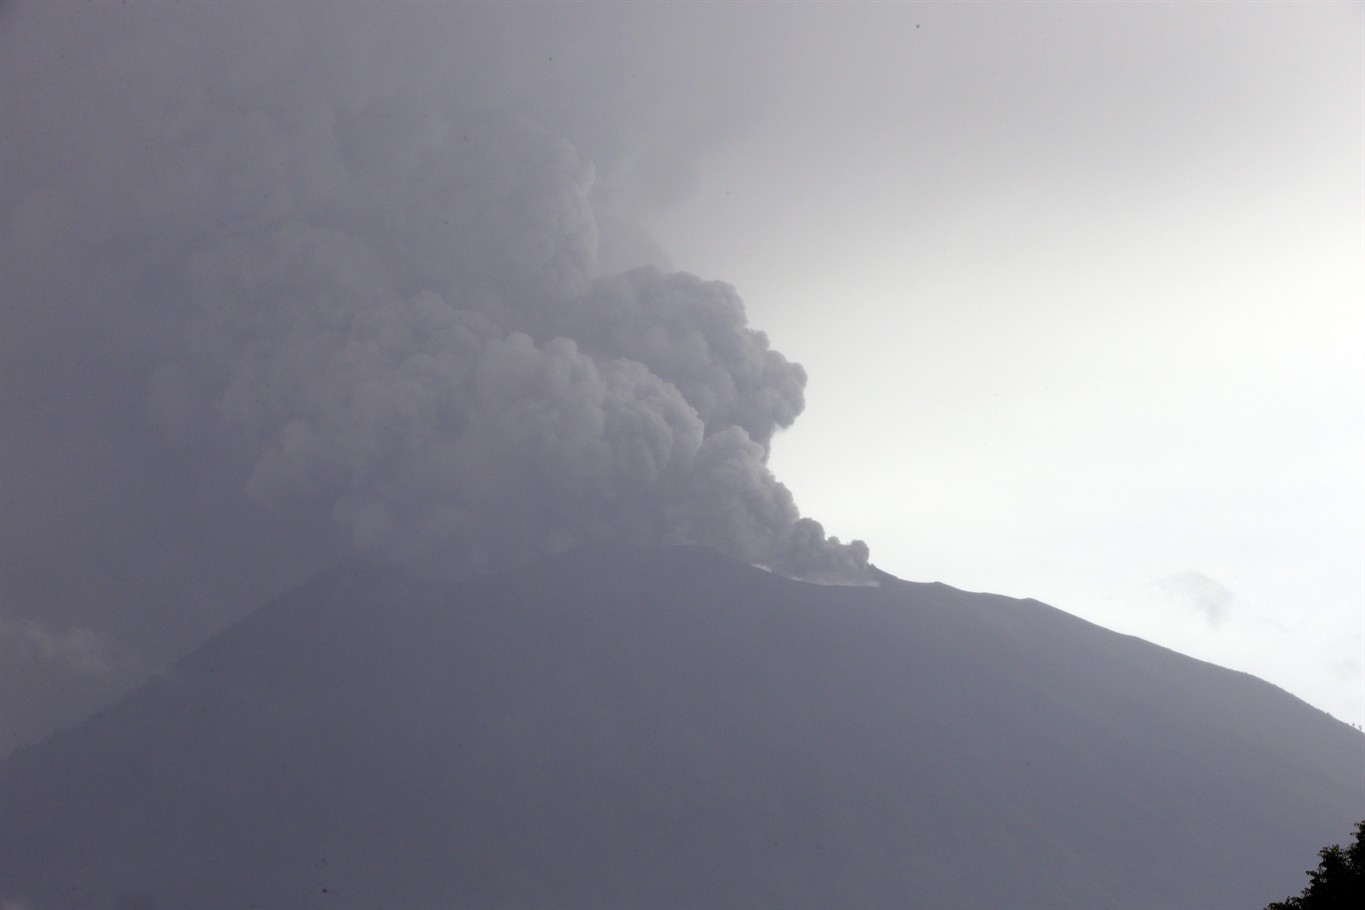 Bali volcano alert raised to highest, airport closed